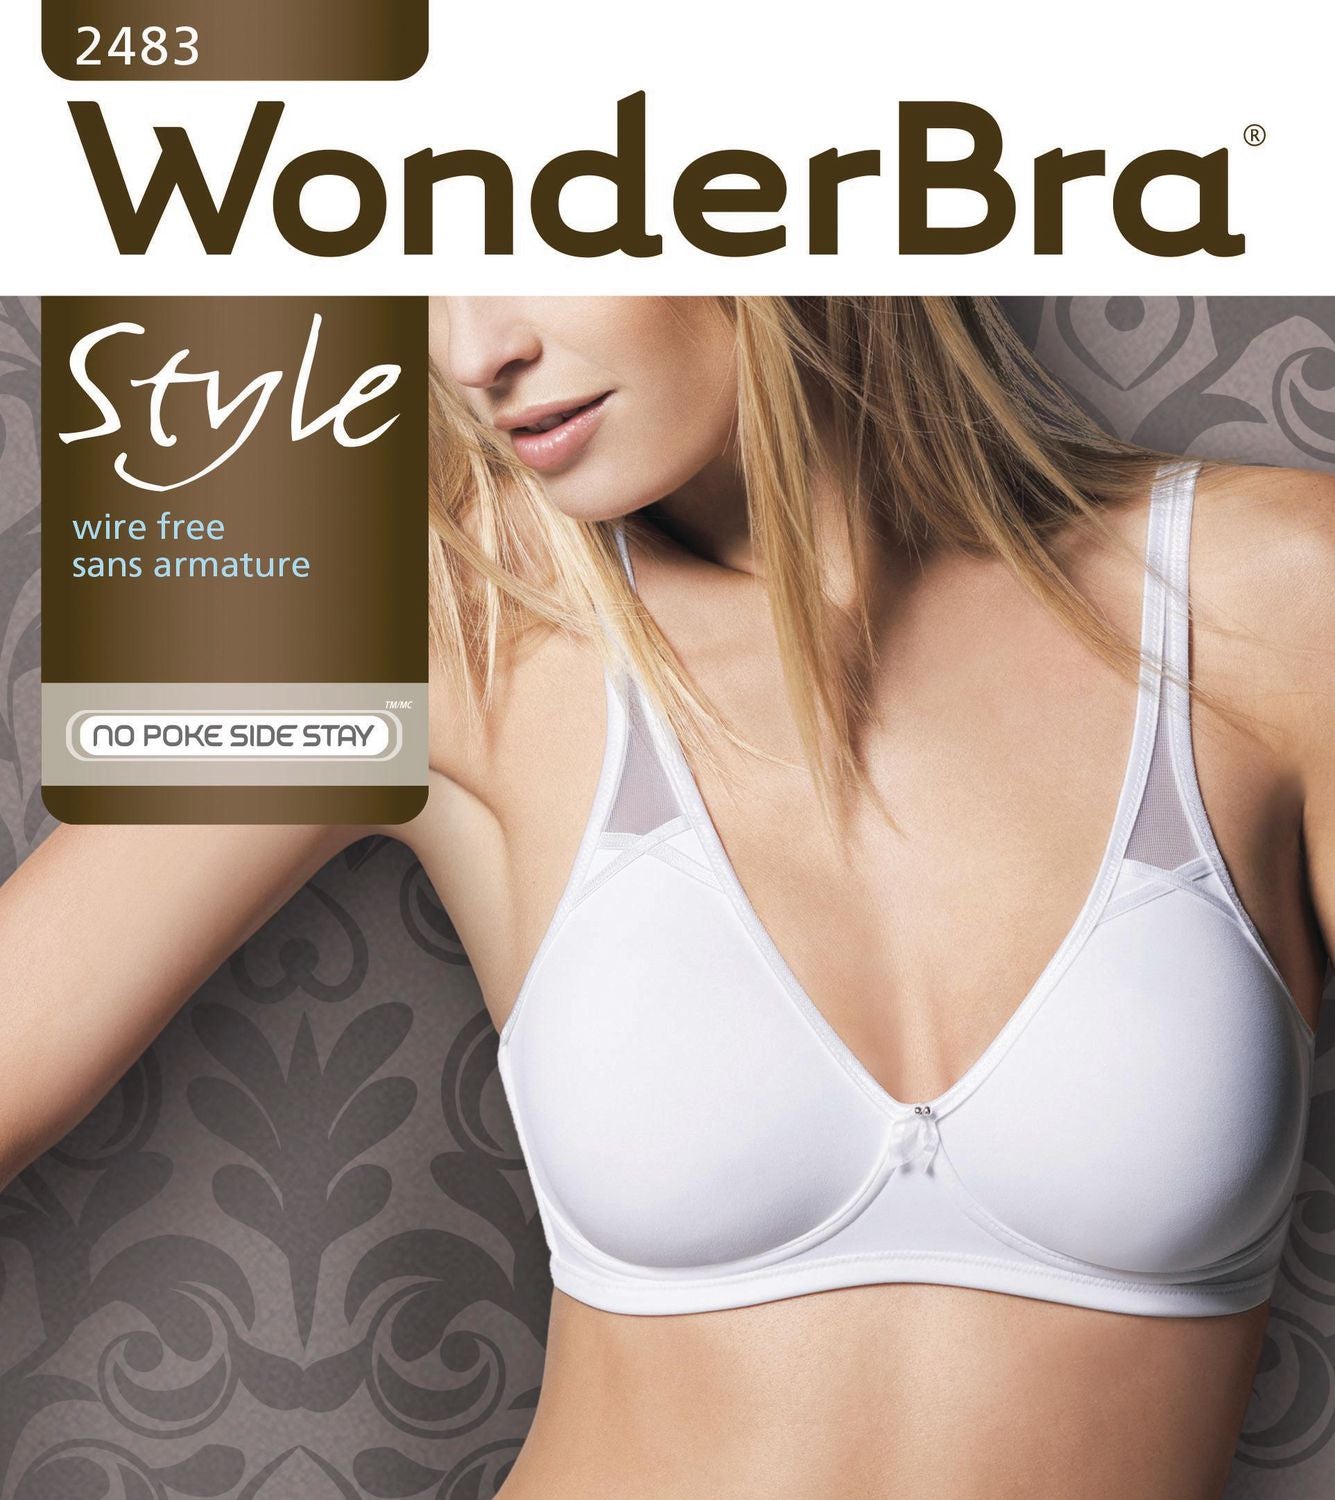 Wonderbra Shape, Shop The Largest Collection